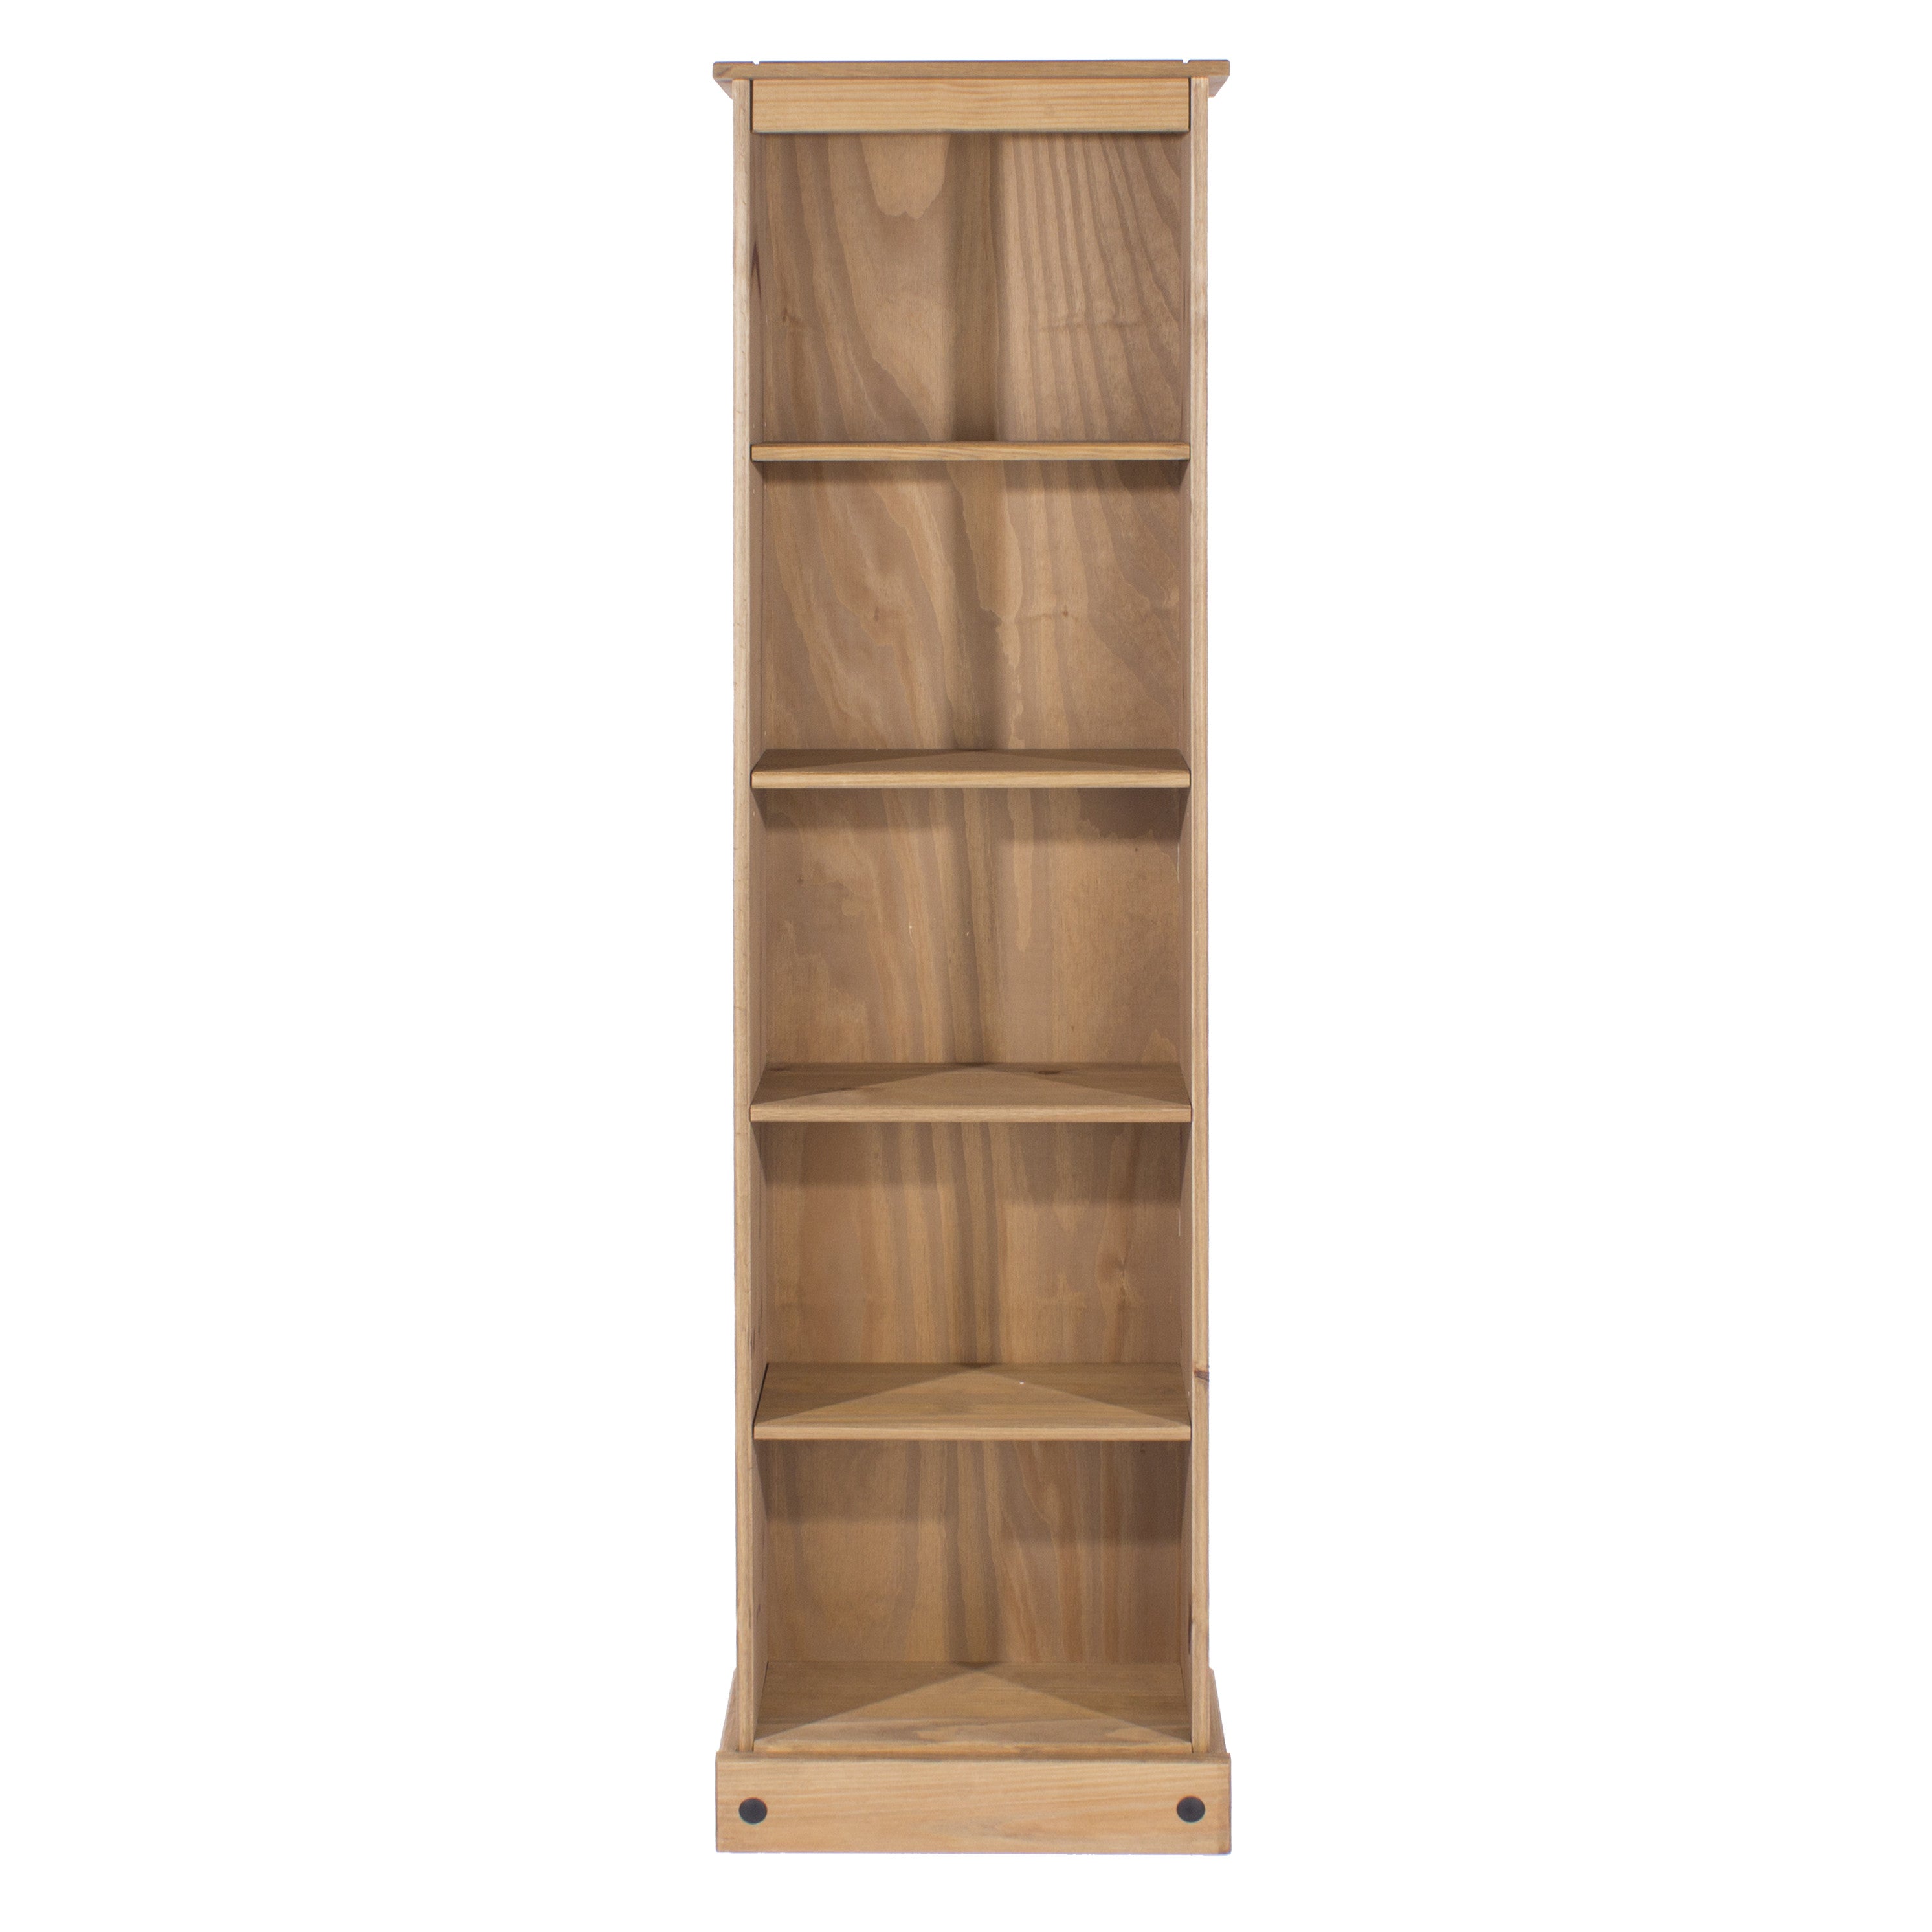 Corona Solid Pine Tall Narrow Bookcase The Dorset Furniture Company